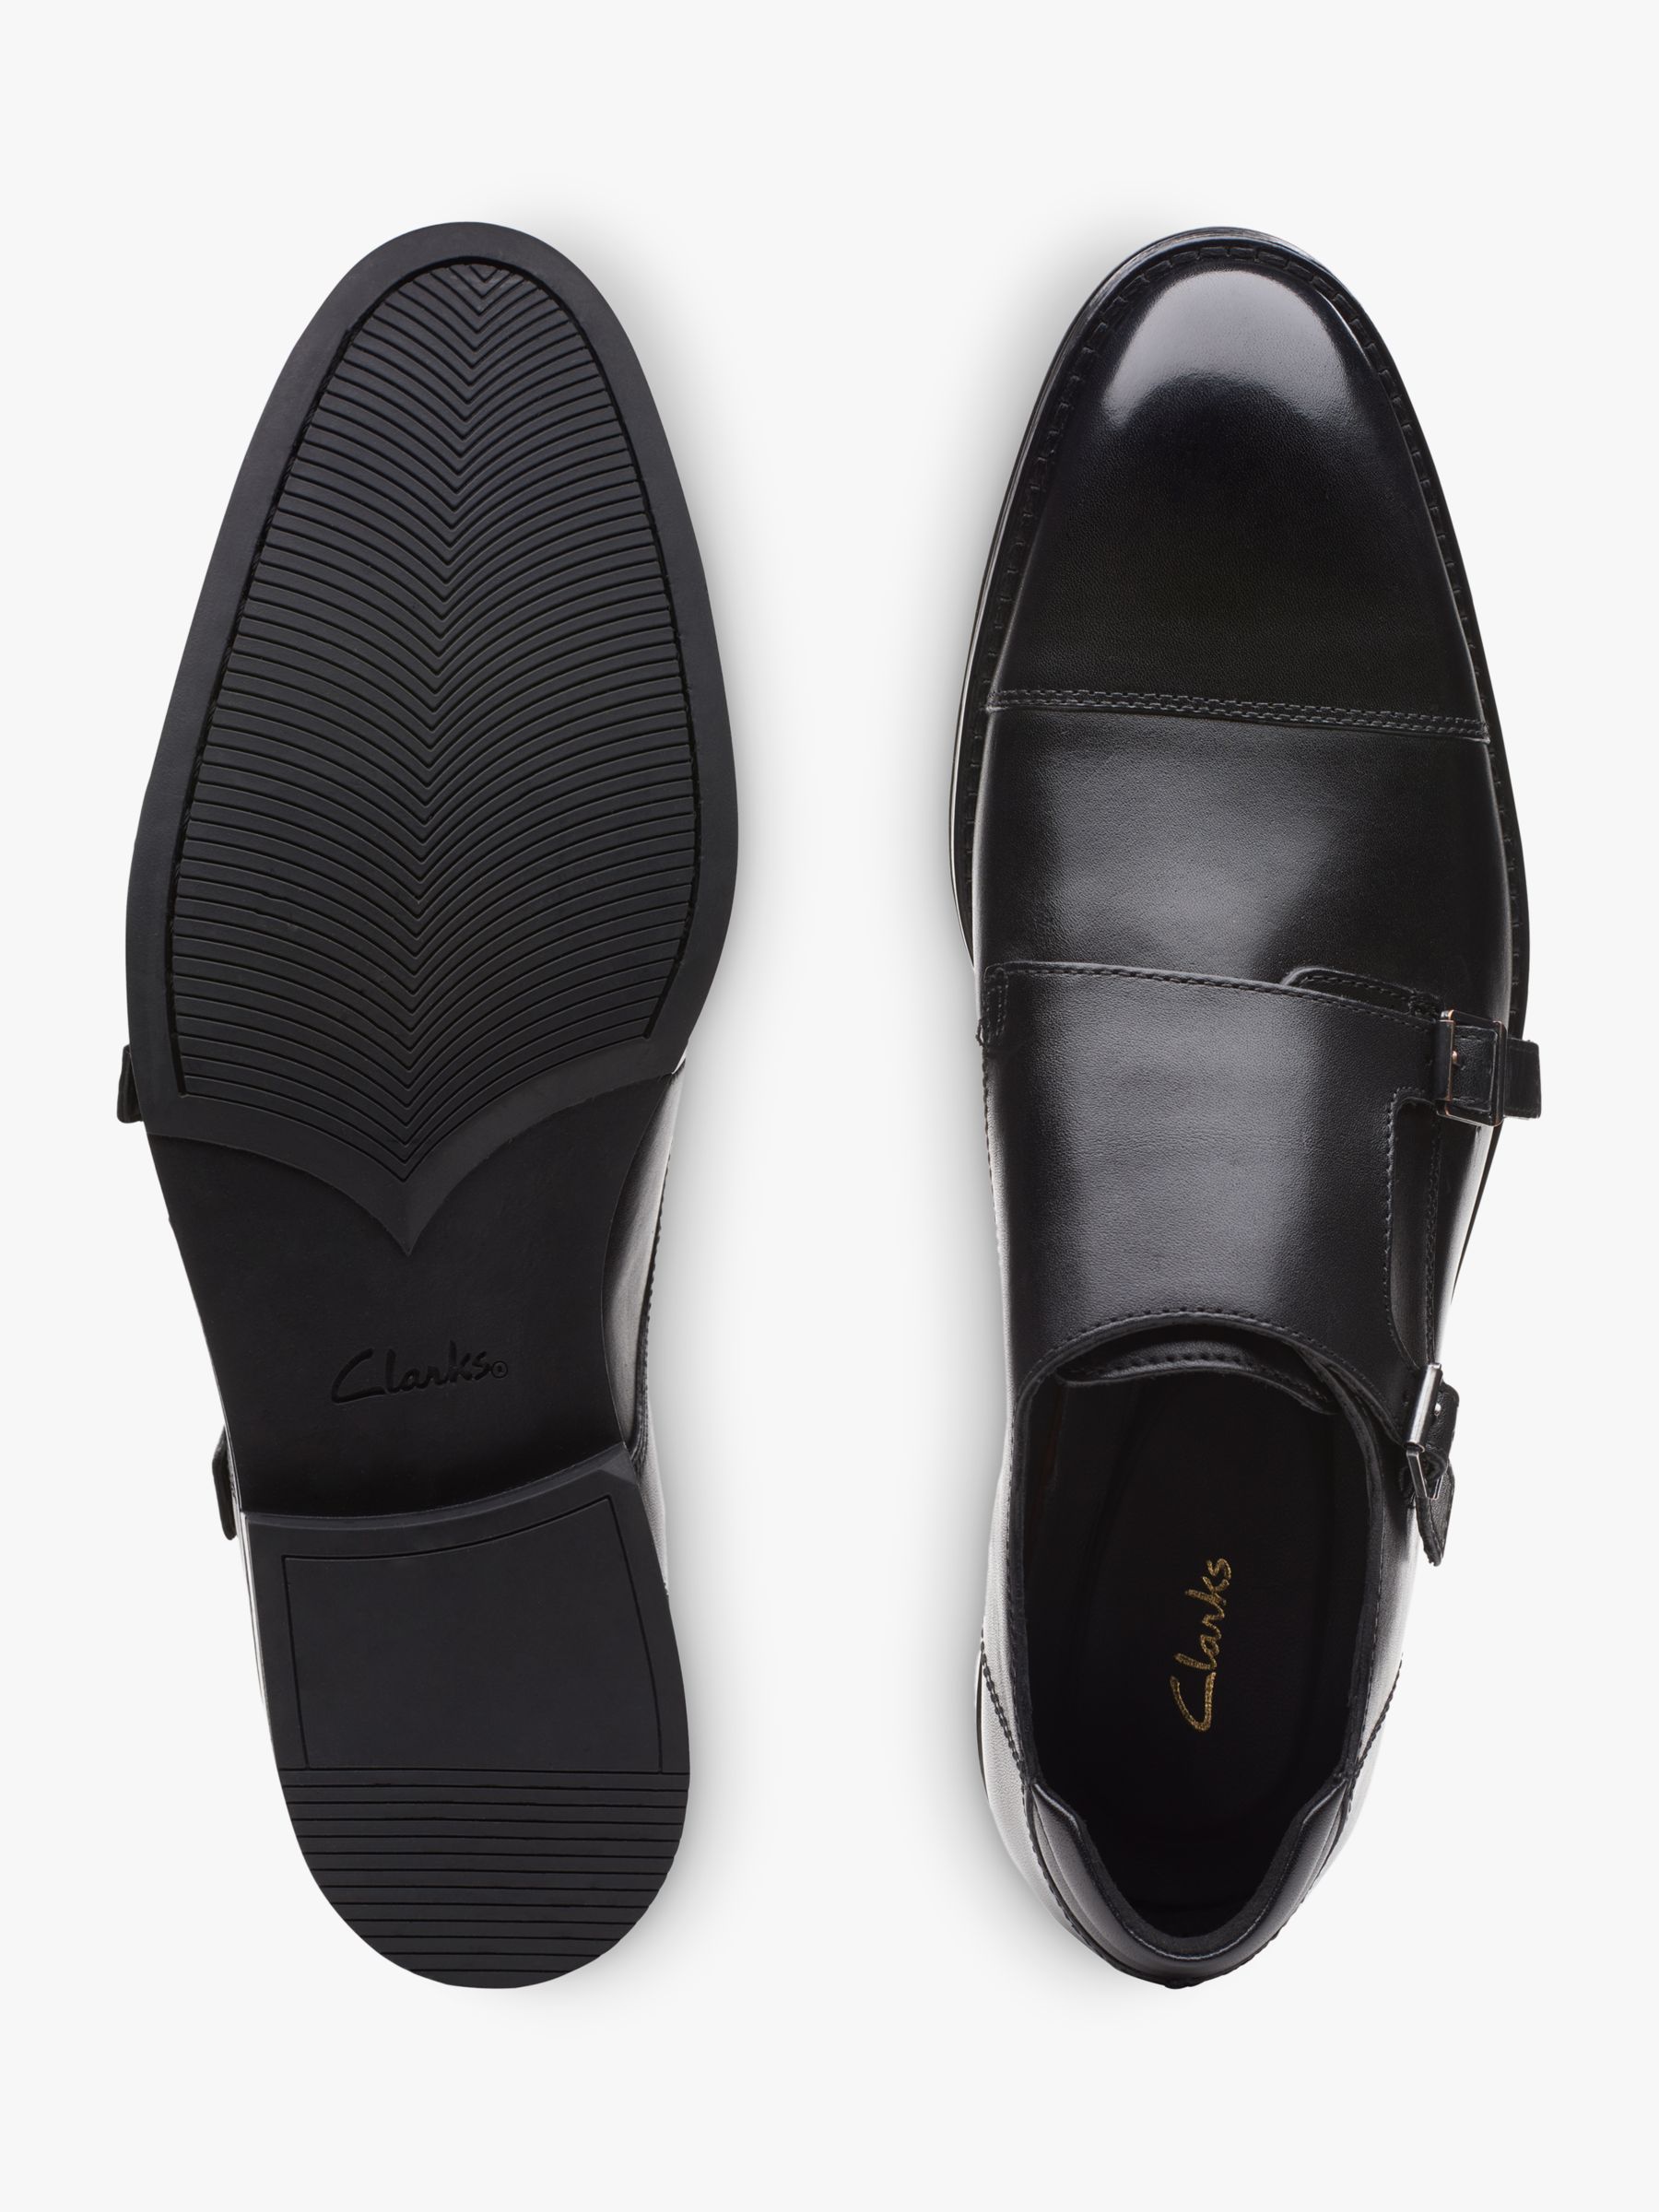 Clarks CitiStride Leather Double Strap Monk Shoes, Black at John Lewis ...